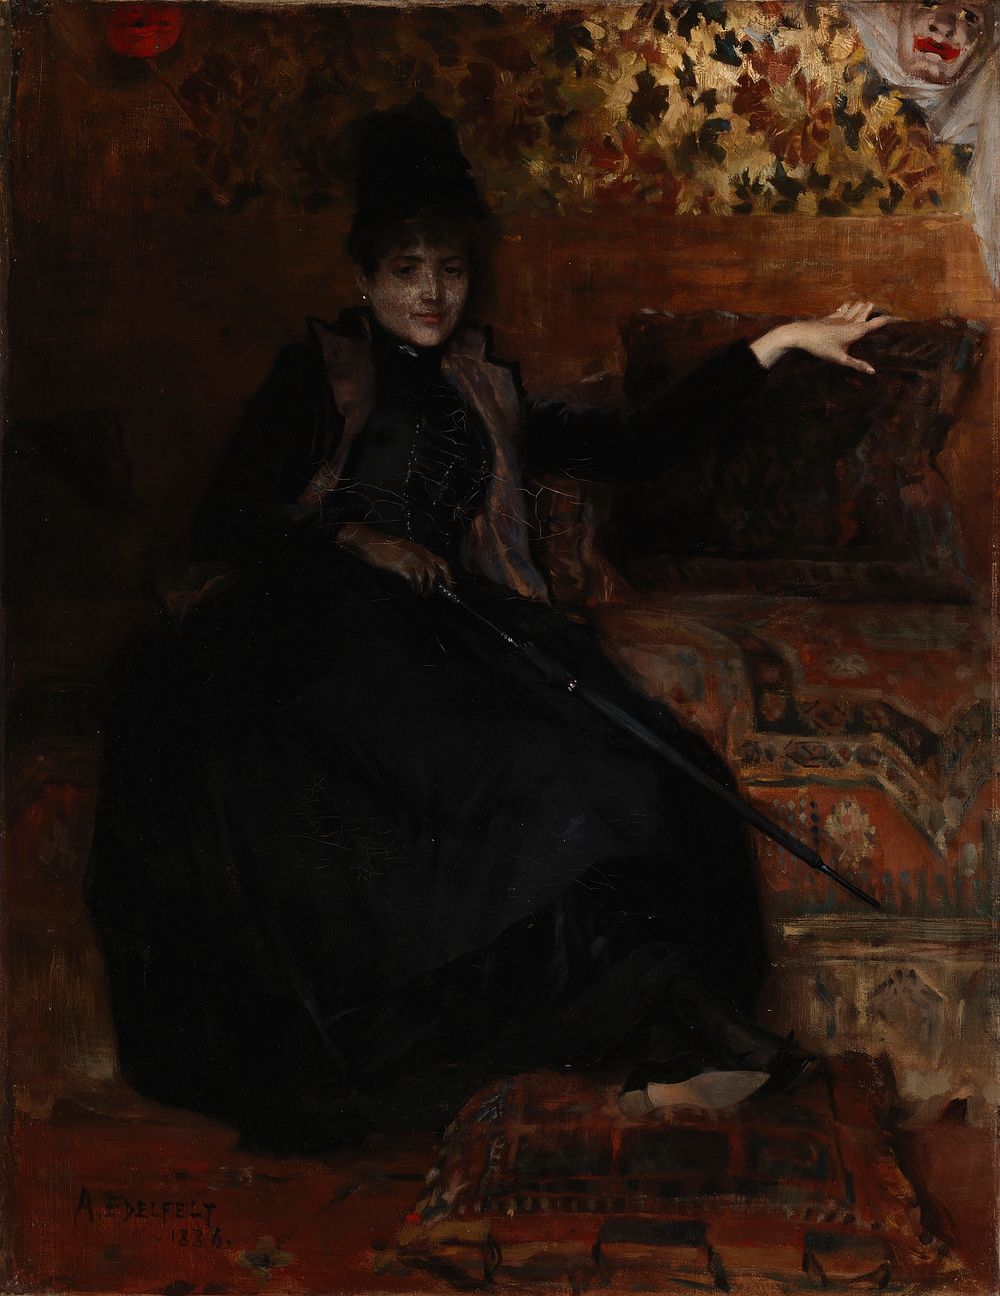 Lady in black, thérèse noire, 1886 by Albert Edelfelt